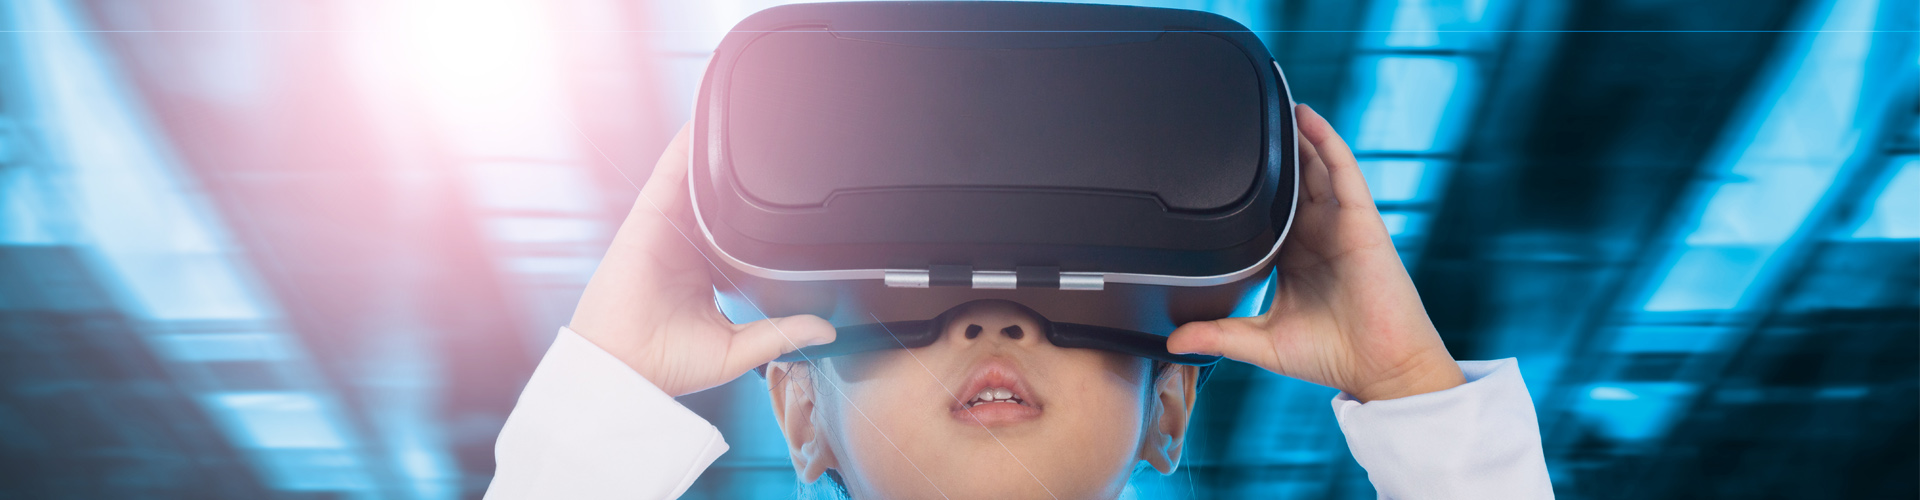 VR for kids